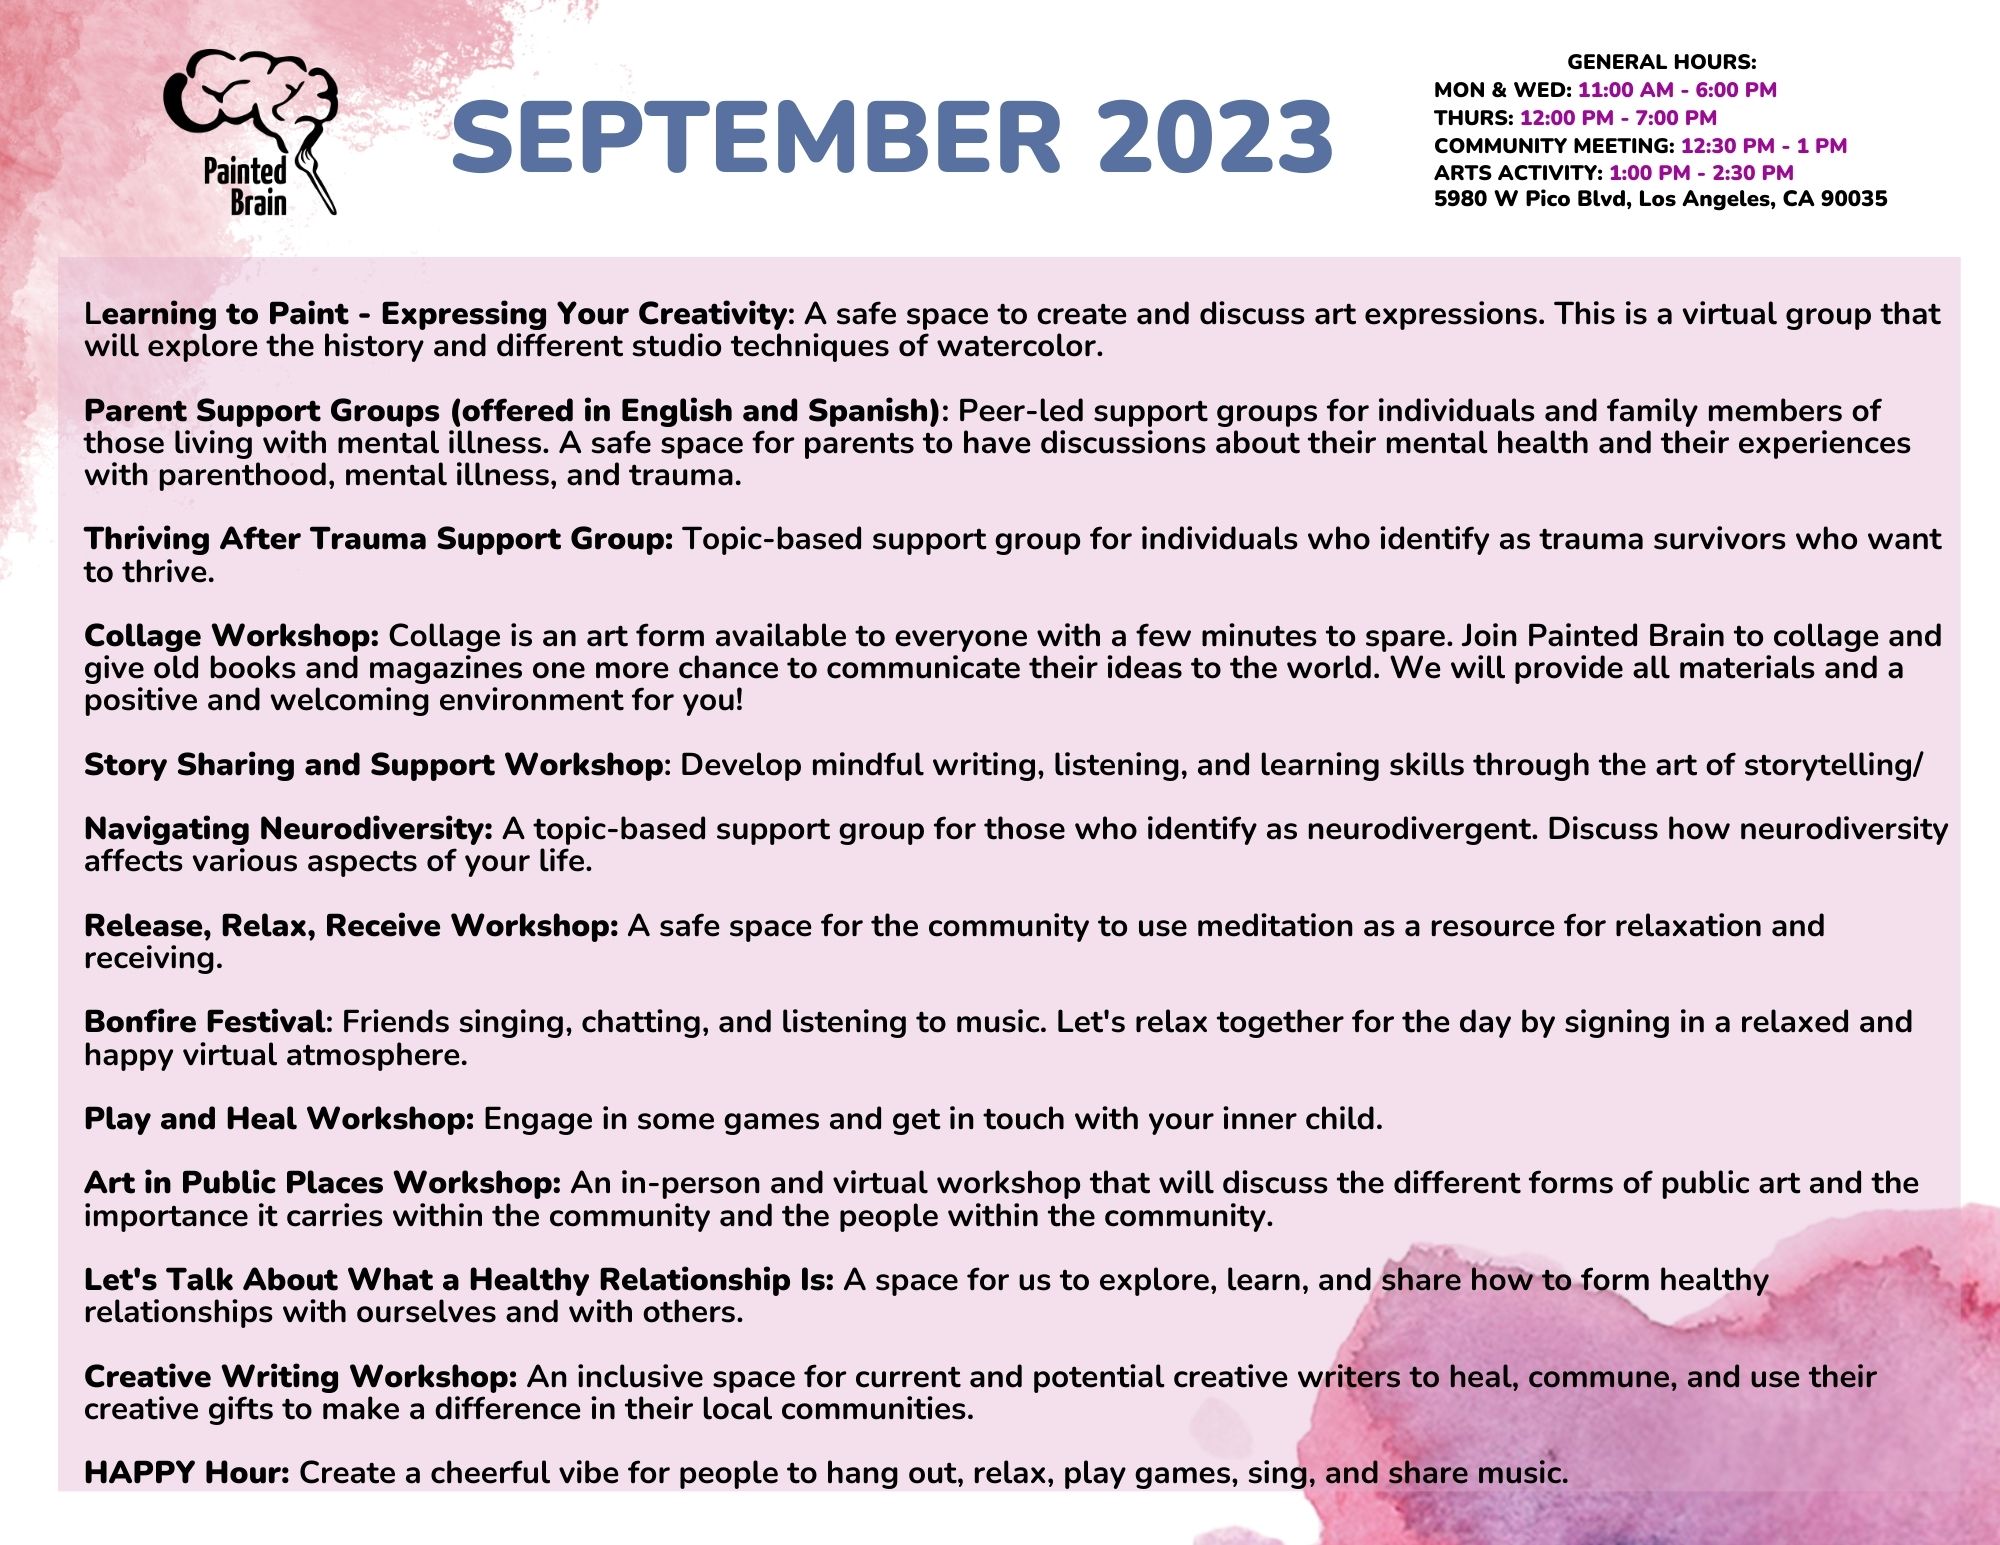 September 2023 calendar descriptions